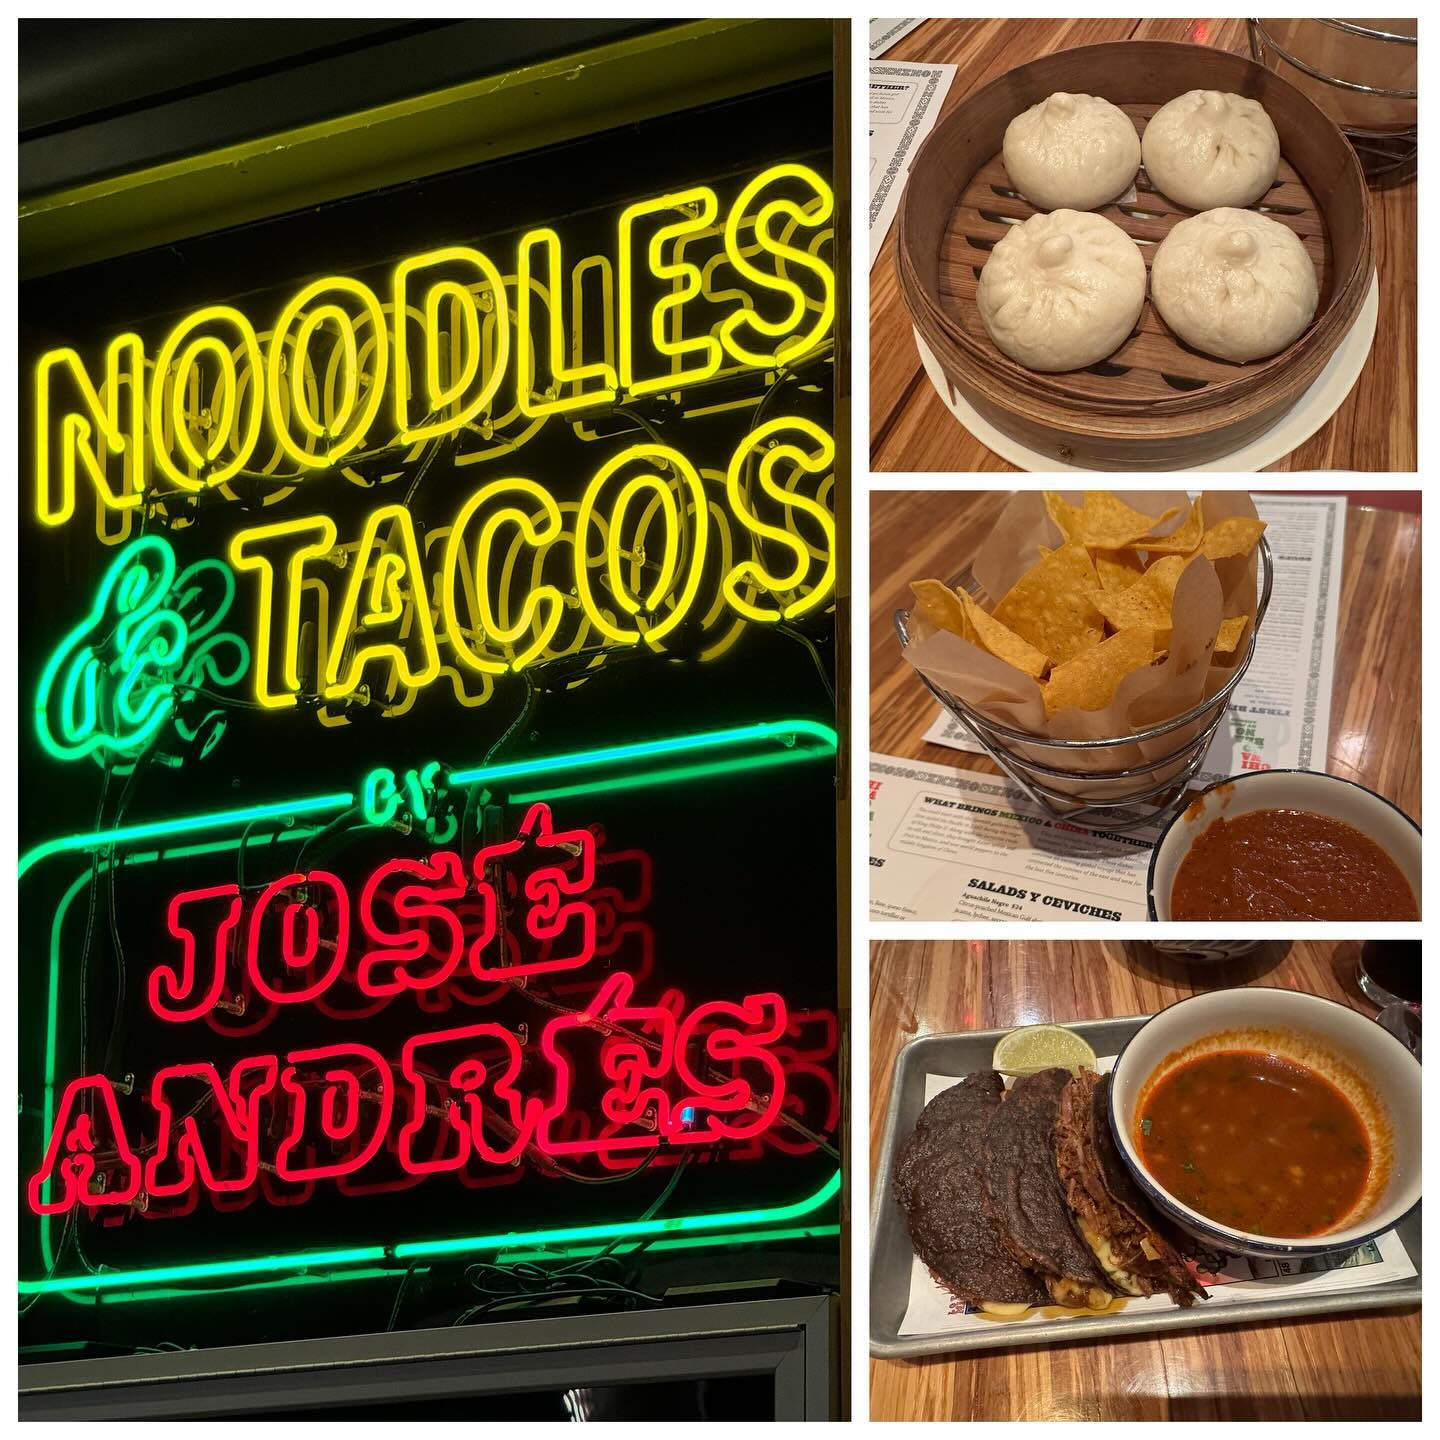 Noodles & Tacos by JA